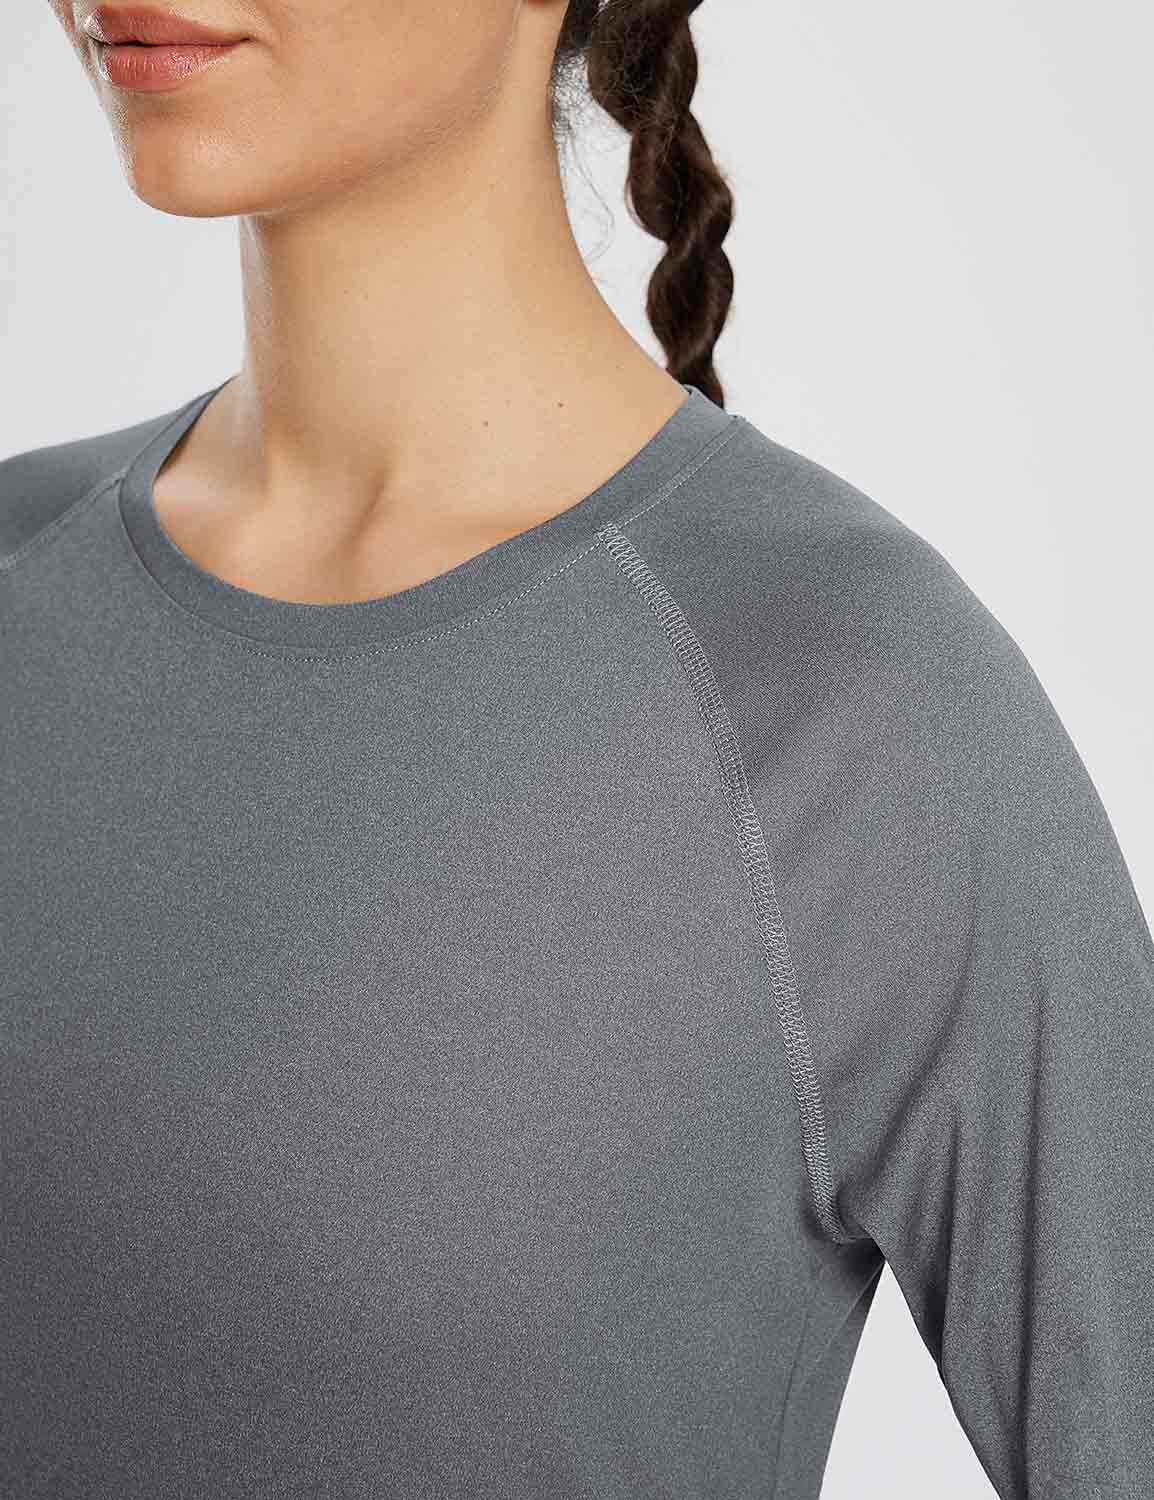 Baleaf Women's UPF 50+ Quick-Dry Sun Shirts ega010 Light Gray Details